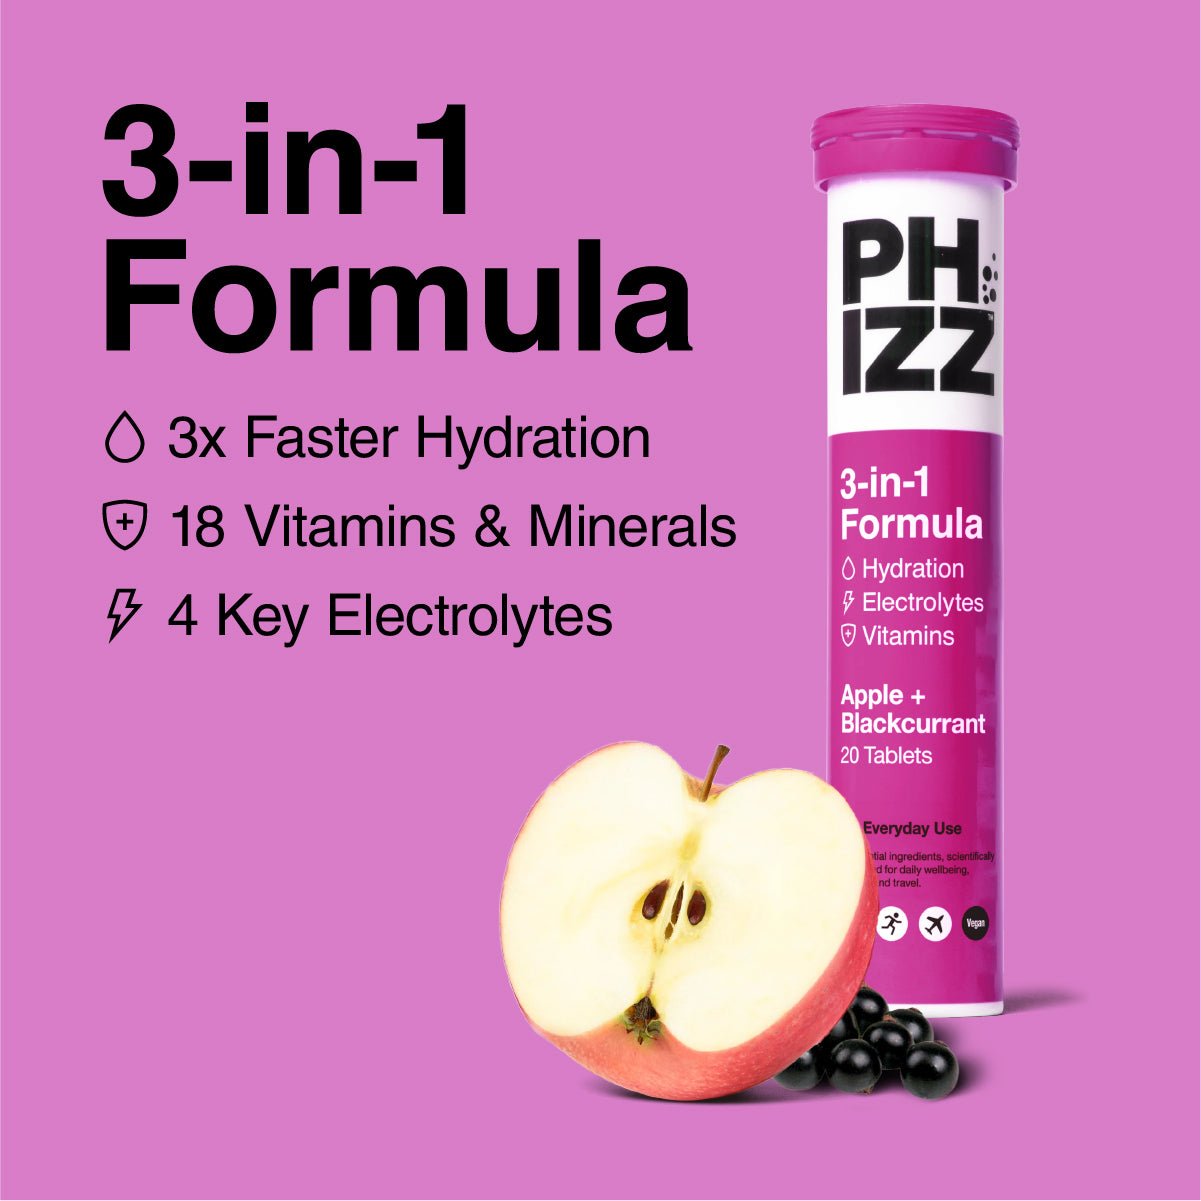 The Phizz Hydration Bundle - Phizz